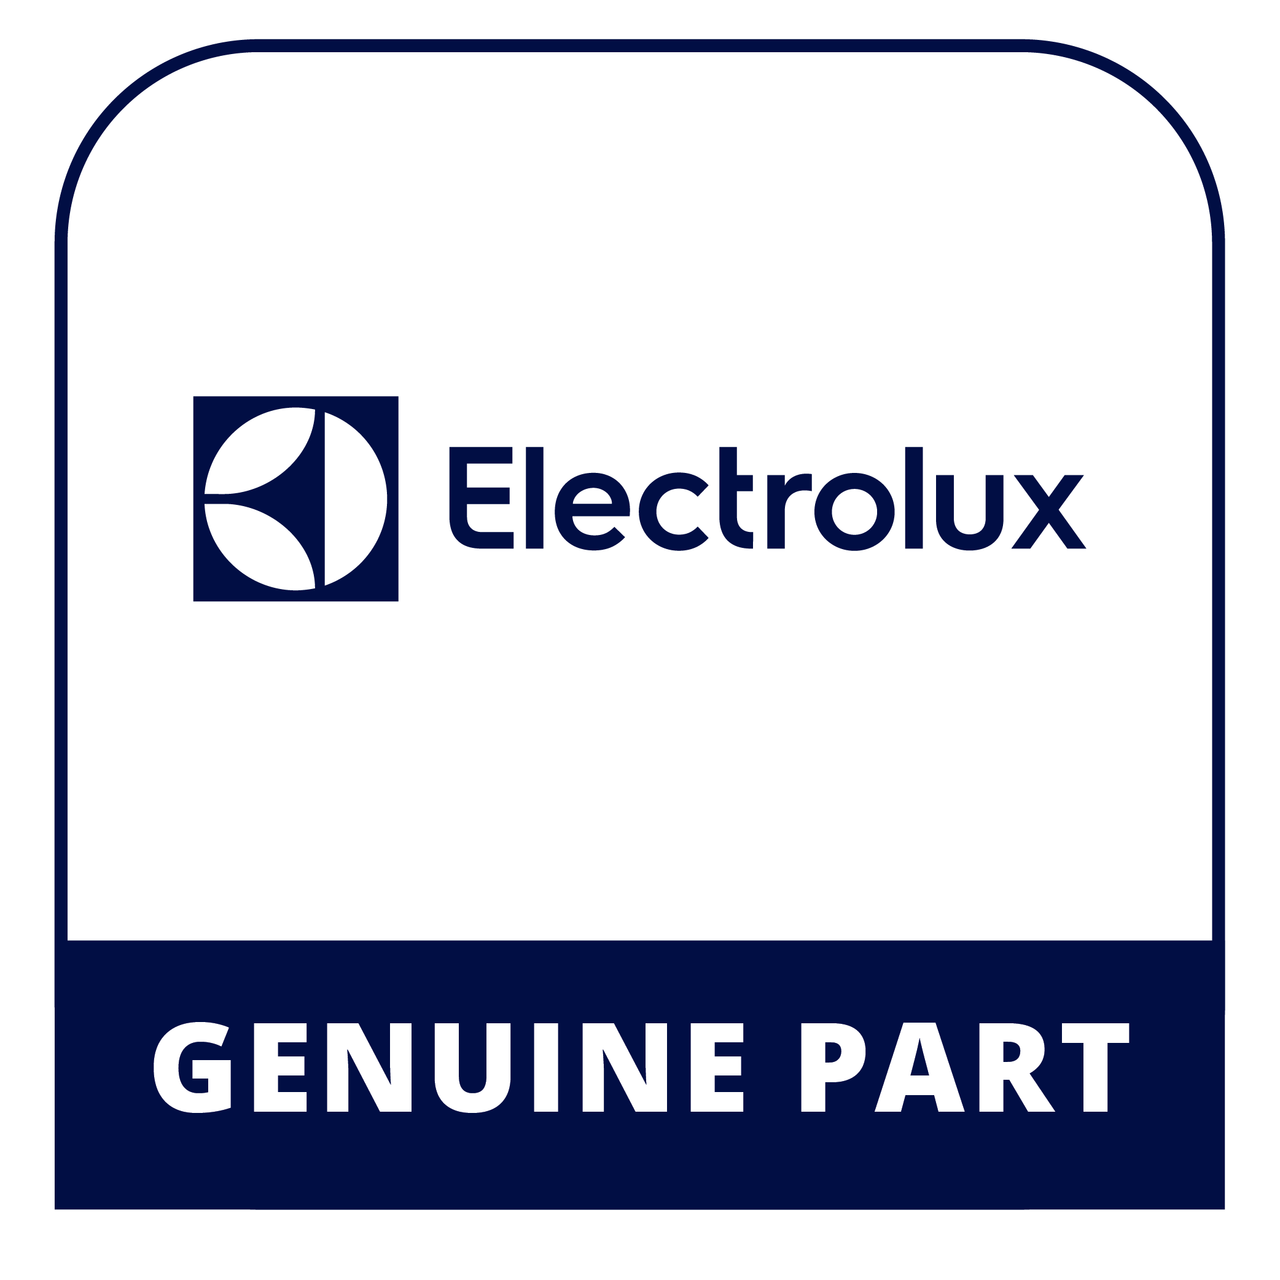 Frigidaire - Electrolux 5304501621 Grate - Genuine Electrolux Part